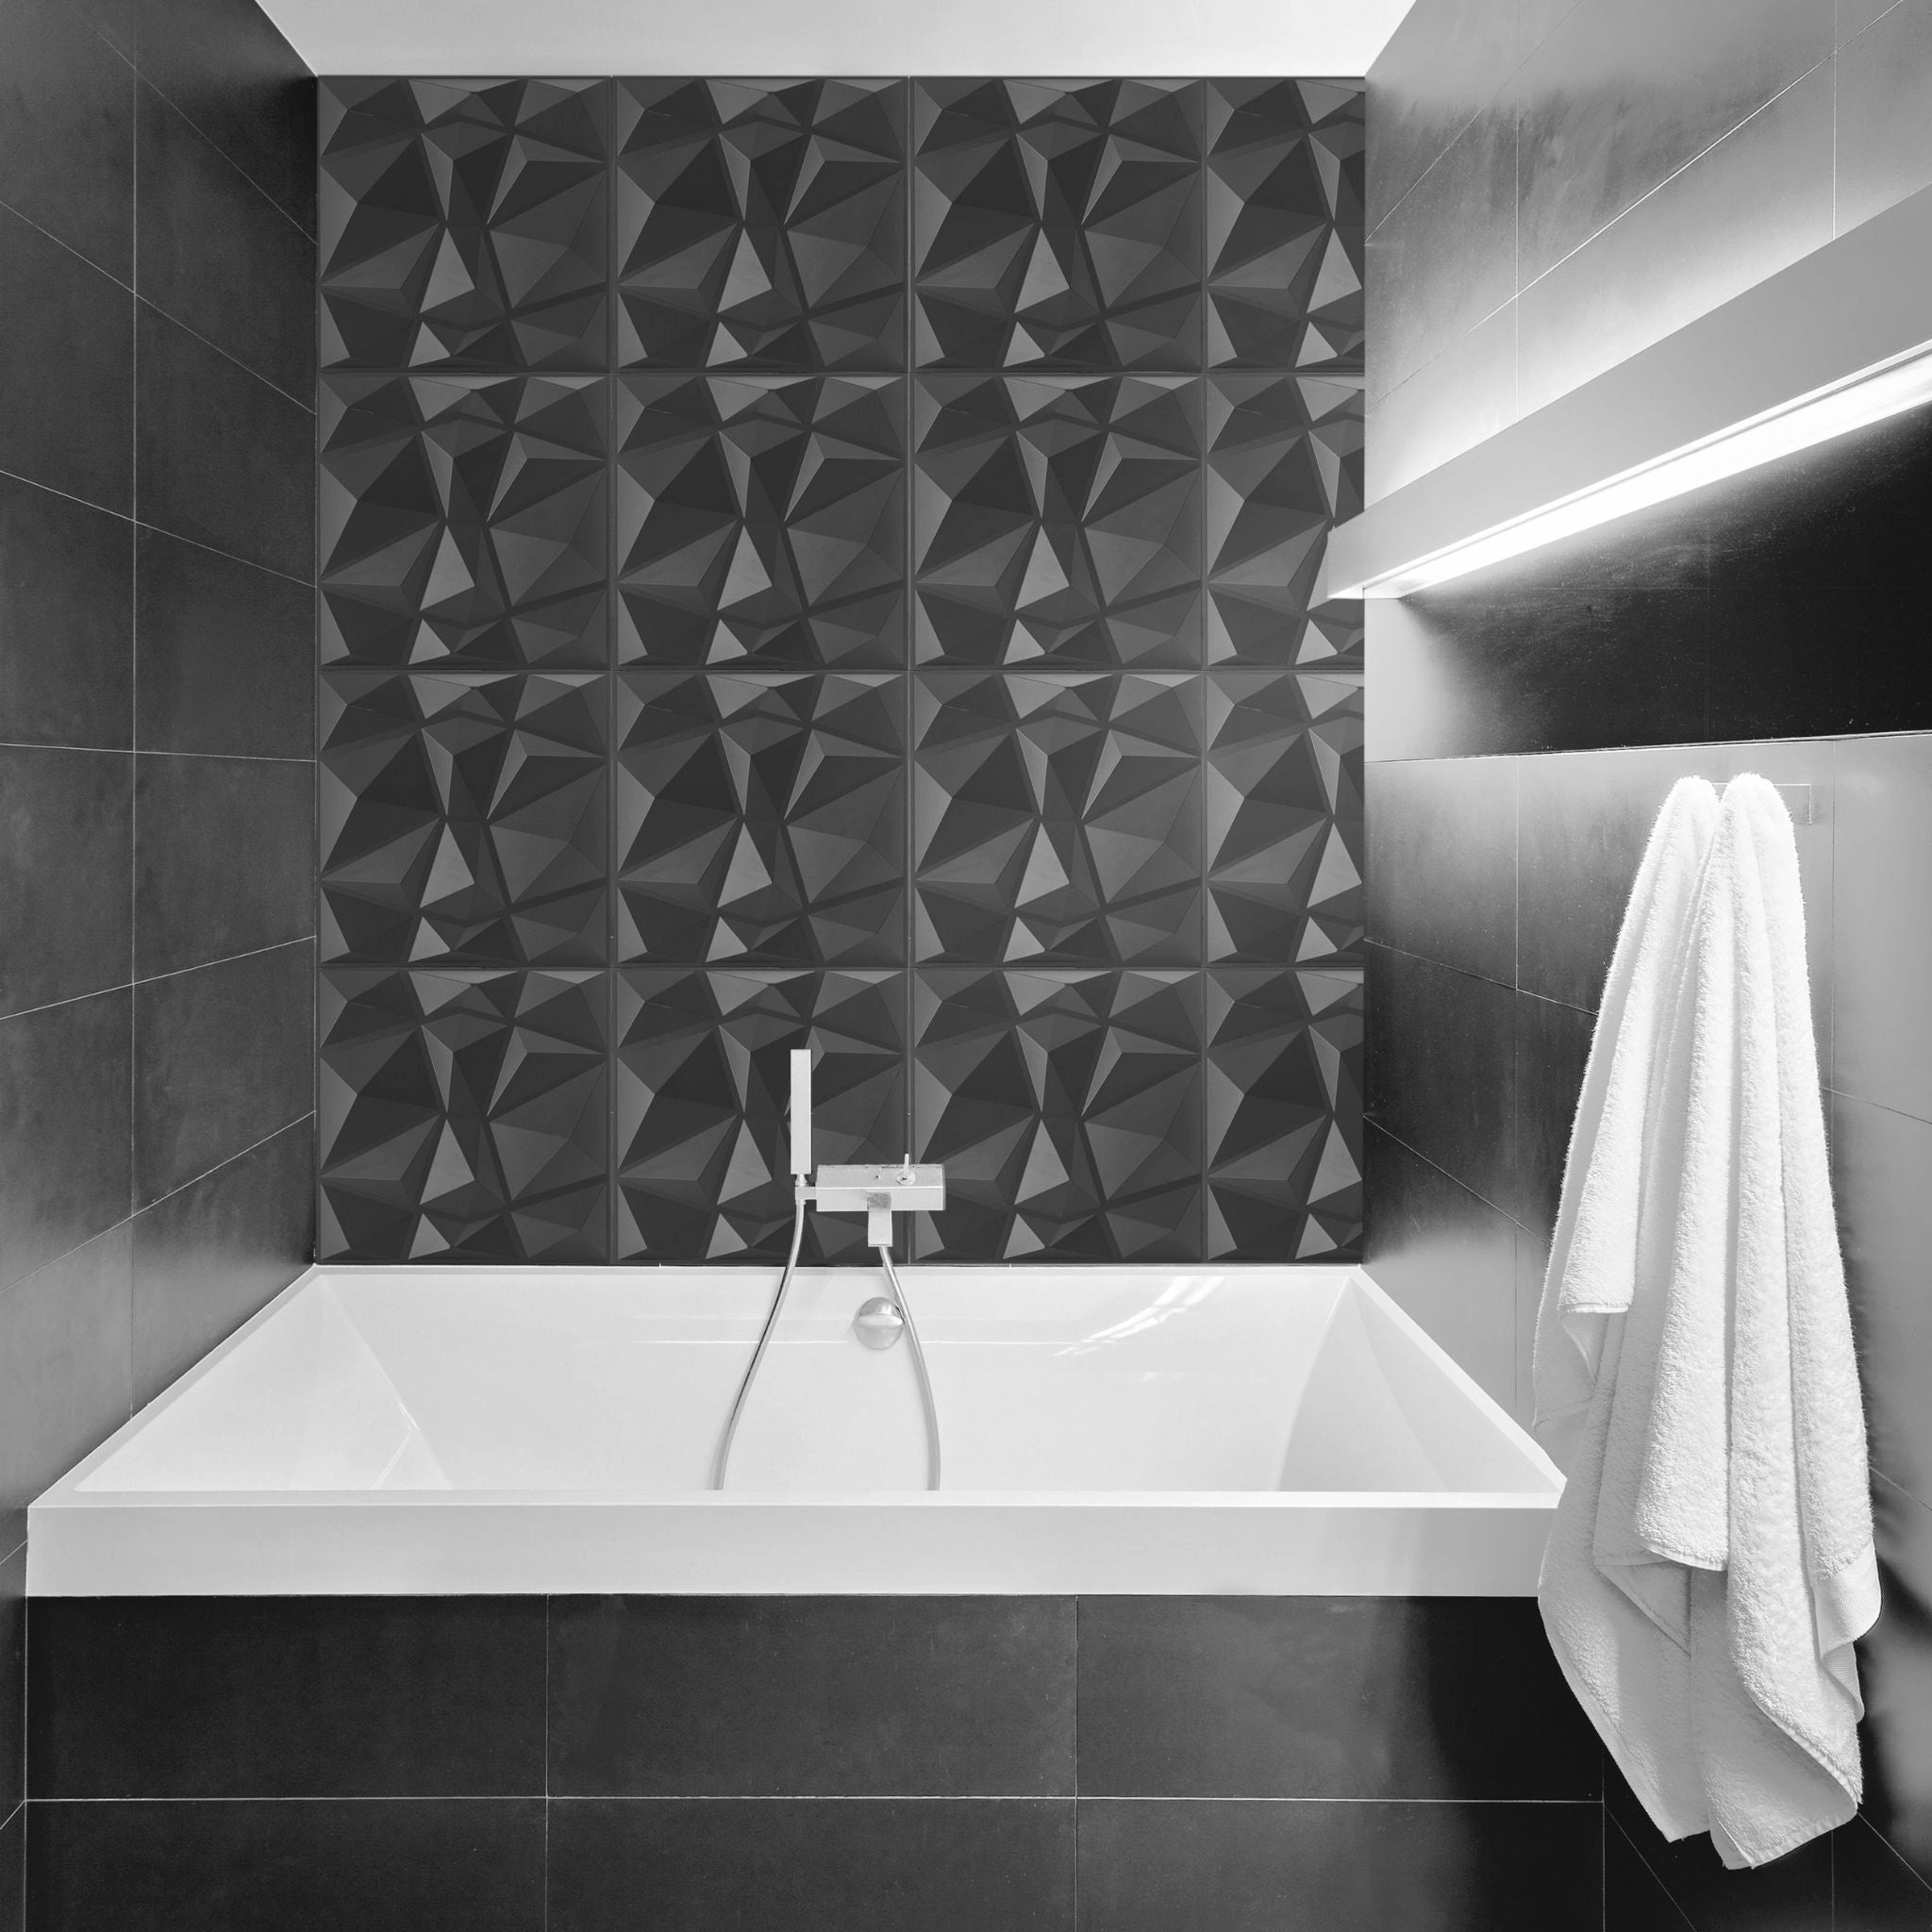 Silver PVC wall panel with geometric design in stylish Bathroom room